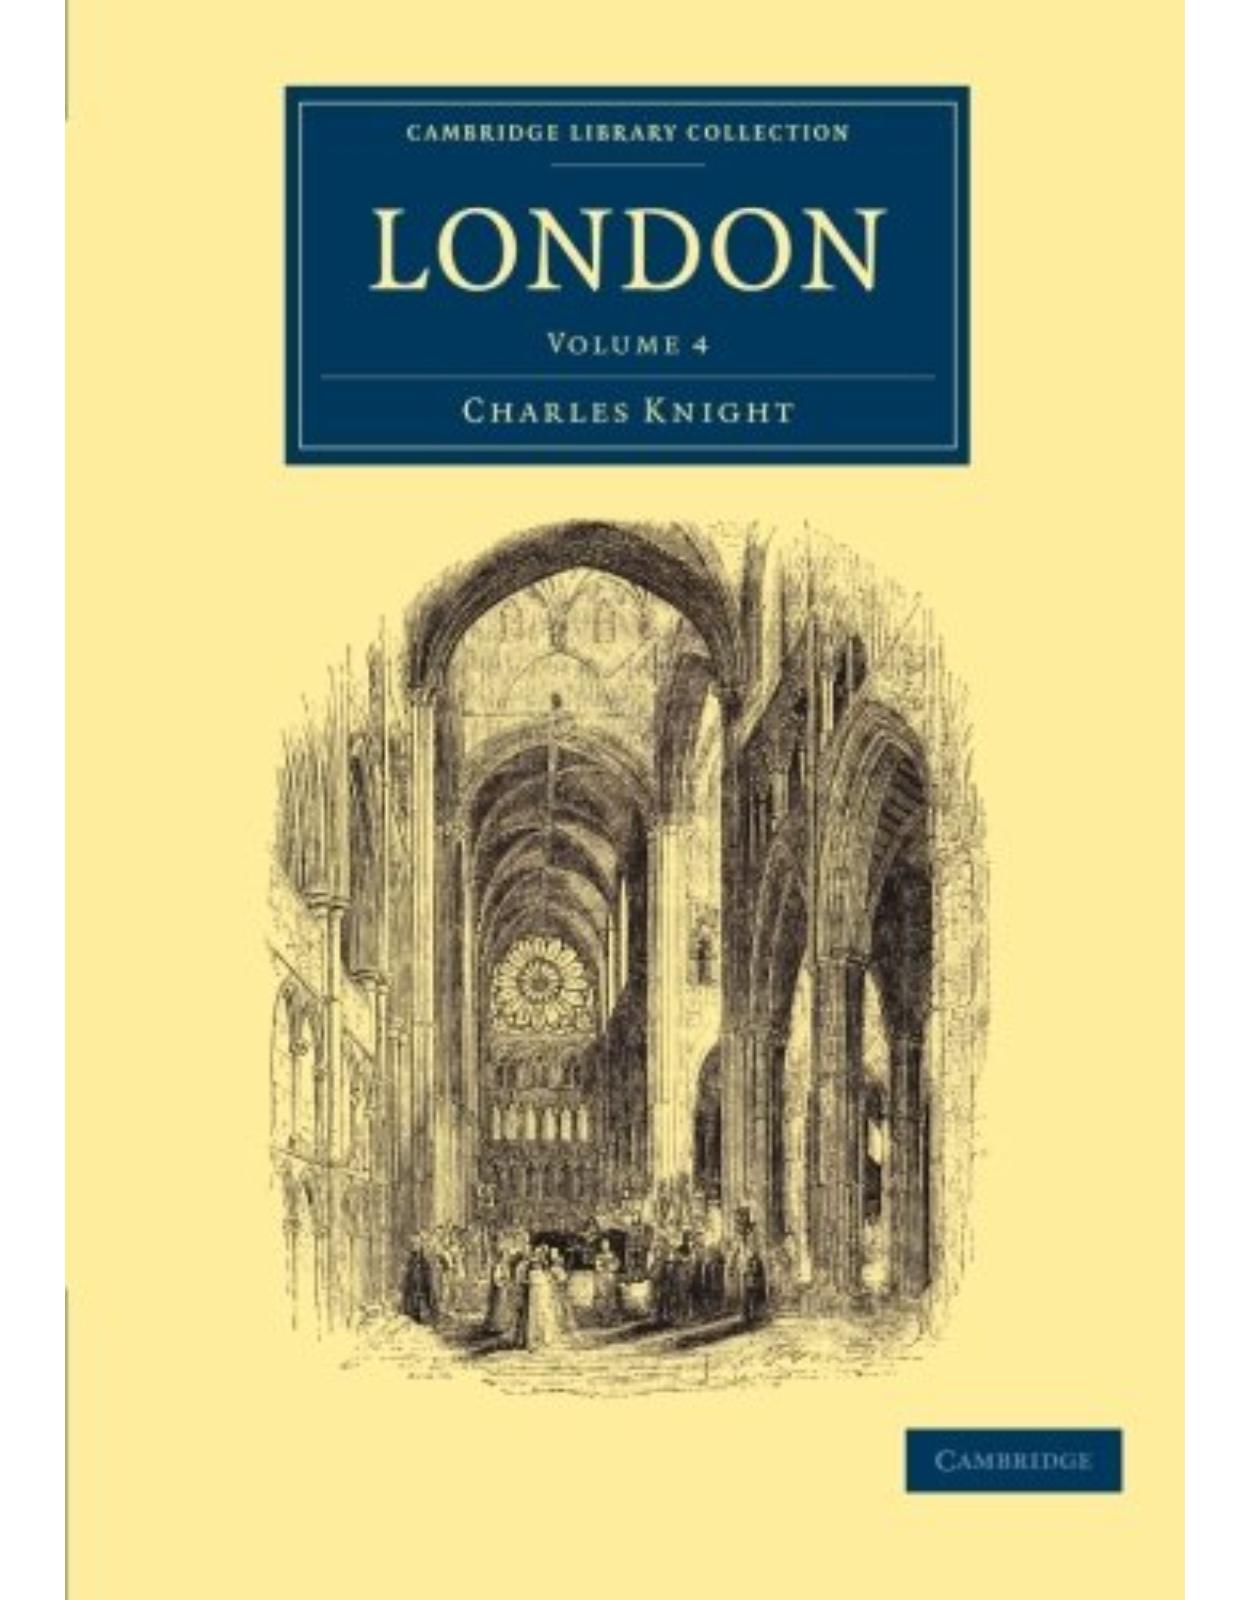 London 6 Volume Set (Cambridge Library Collection - British and Irish History, 19th Century)